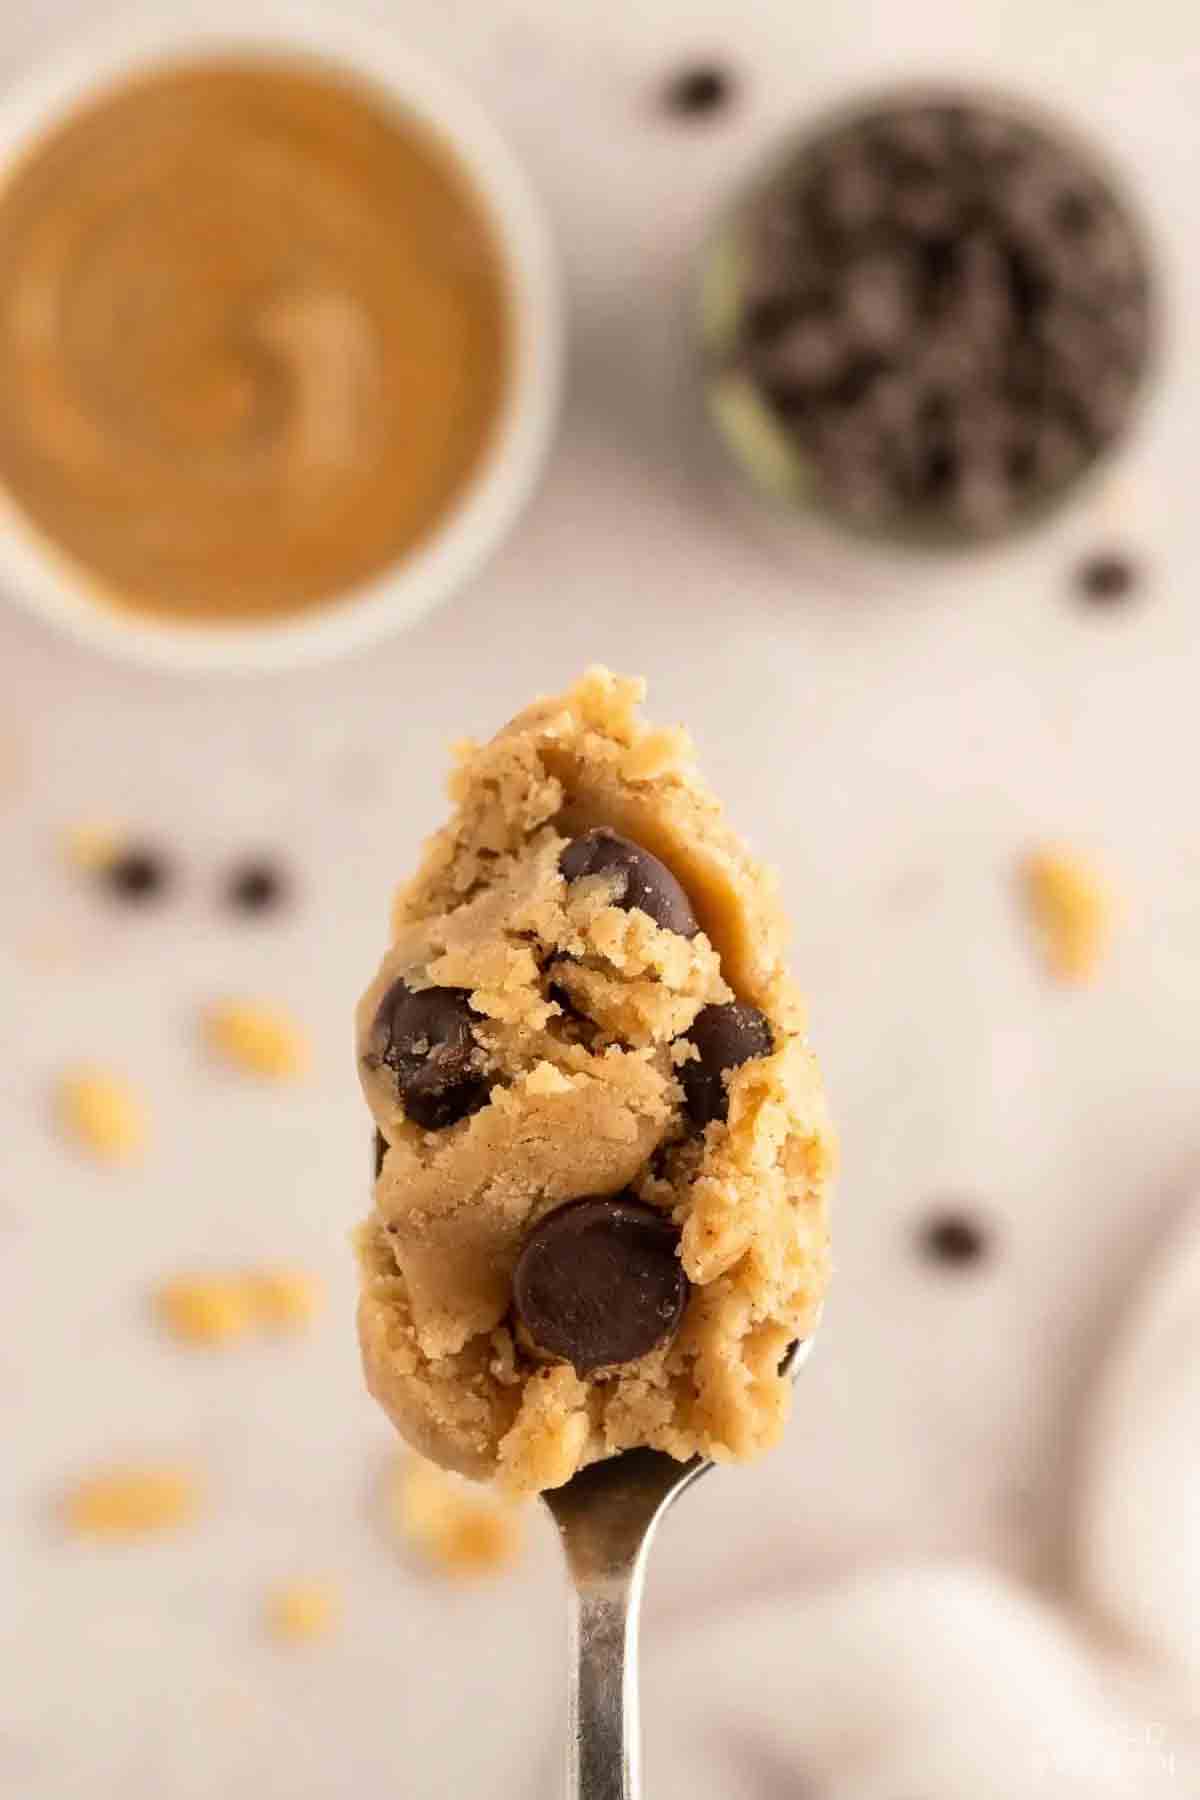 Edible Peanut Butter Cookie Dough